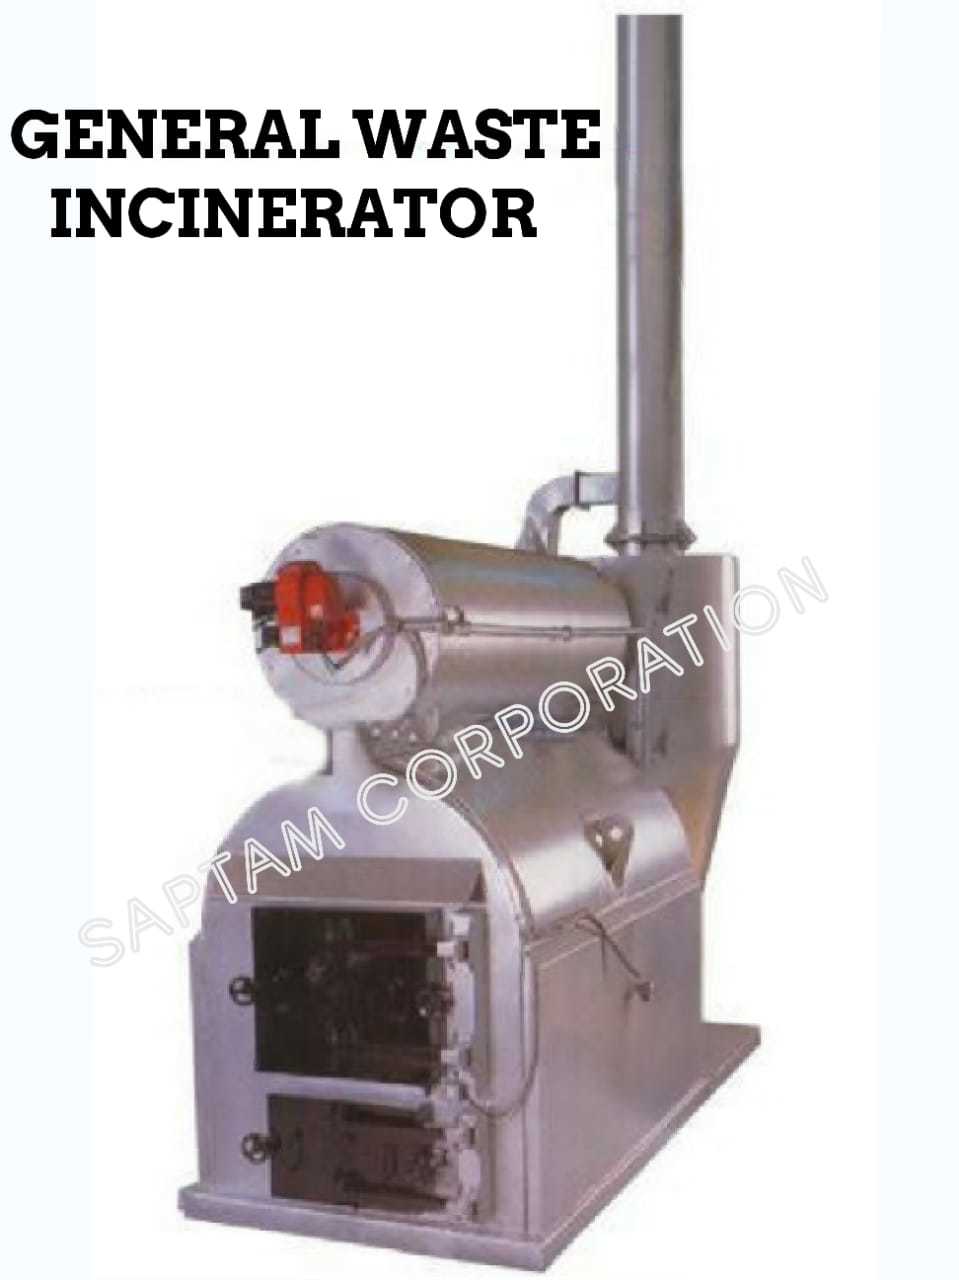 Fuel Free Incinerator